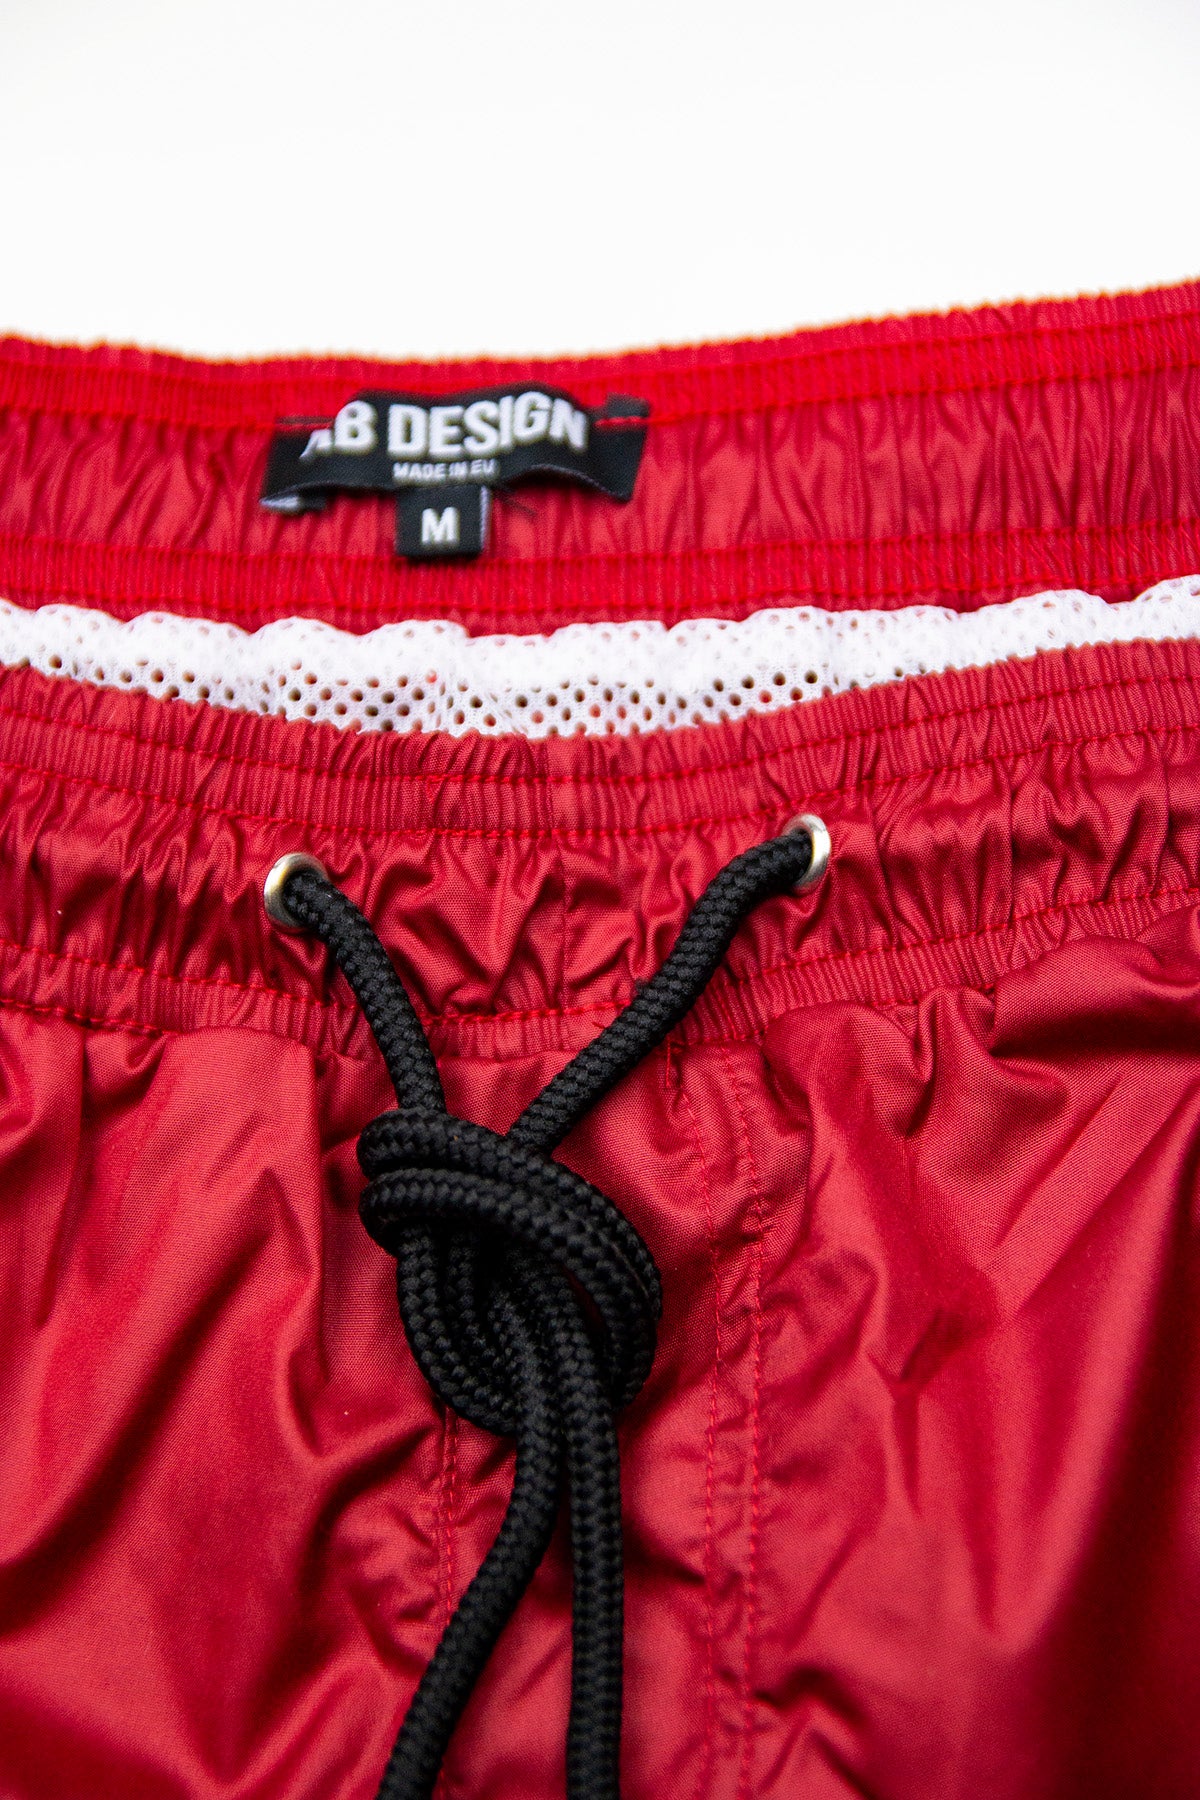 Bundle 3 - Red Beach Shorts + Black Hat White Logo + Tank Top MD885